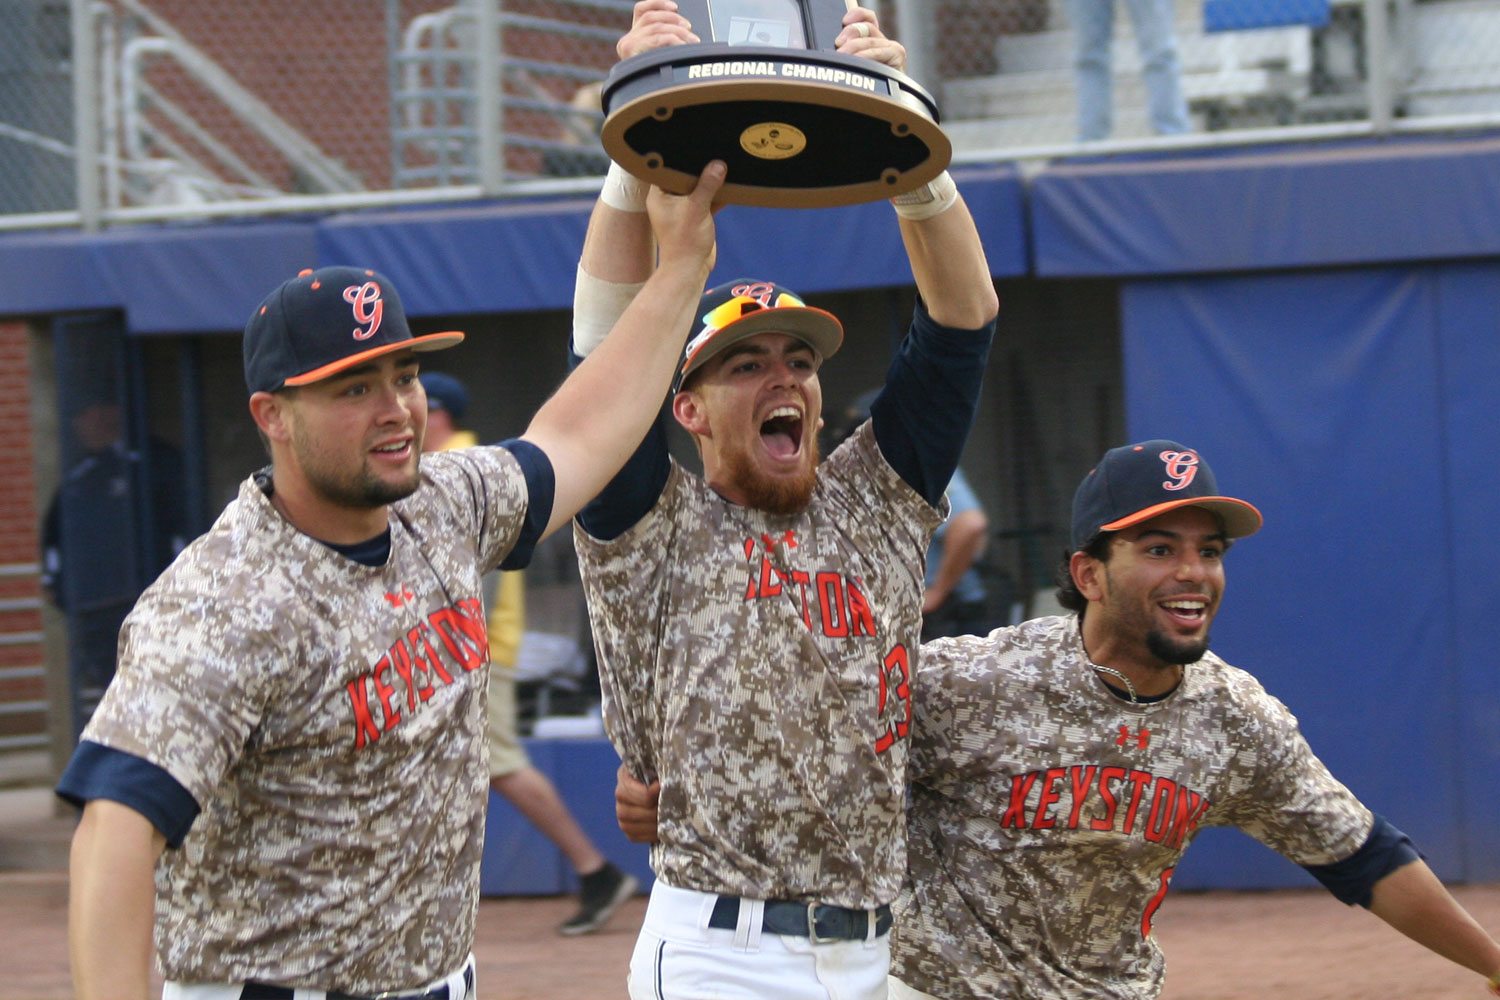 Three baseball players hoist a trophy